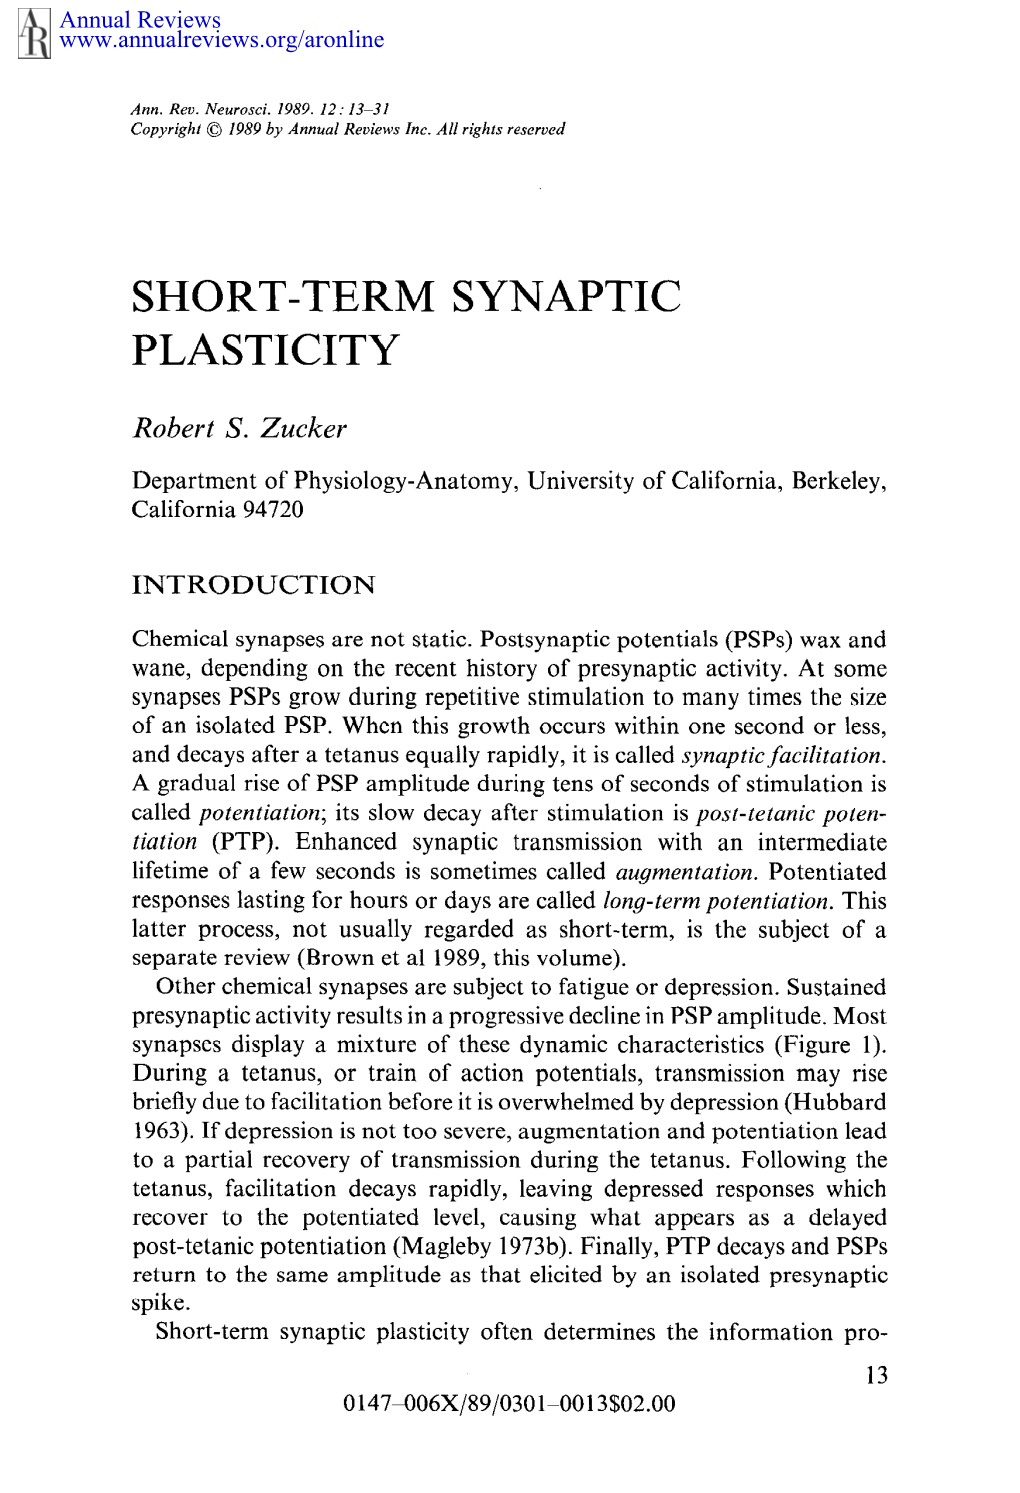 Short-Term Synaptic Plasticity